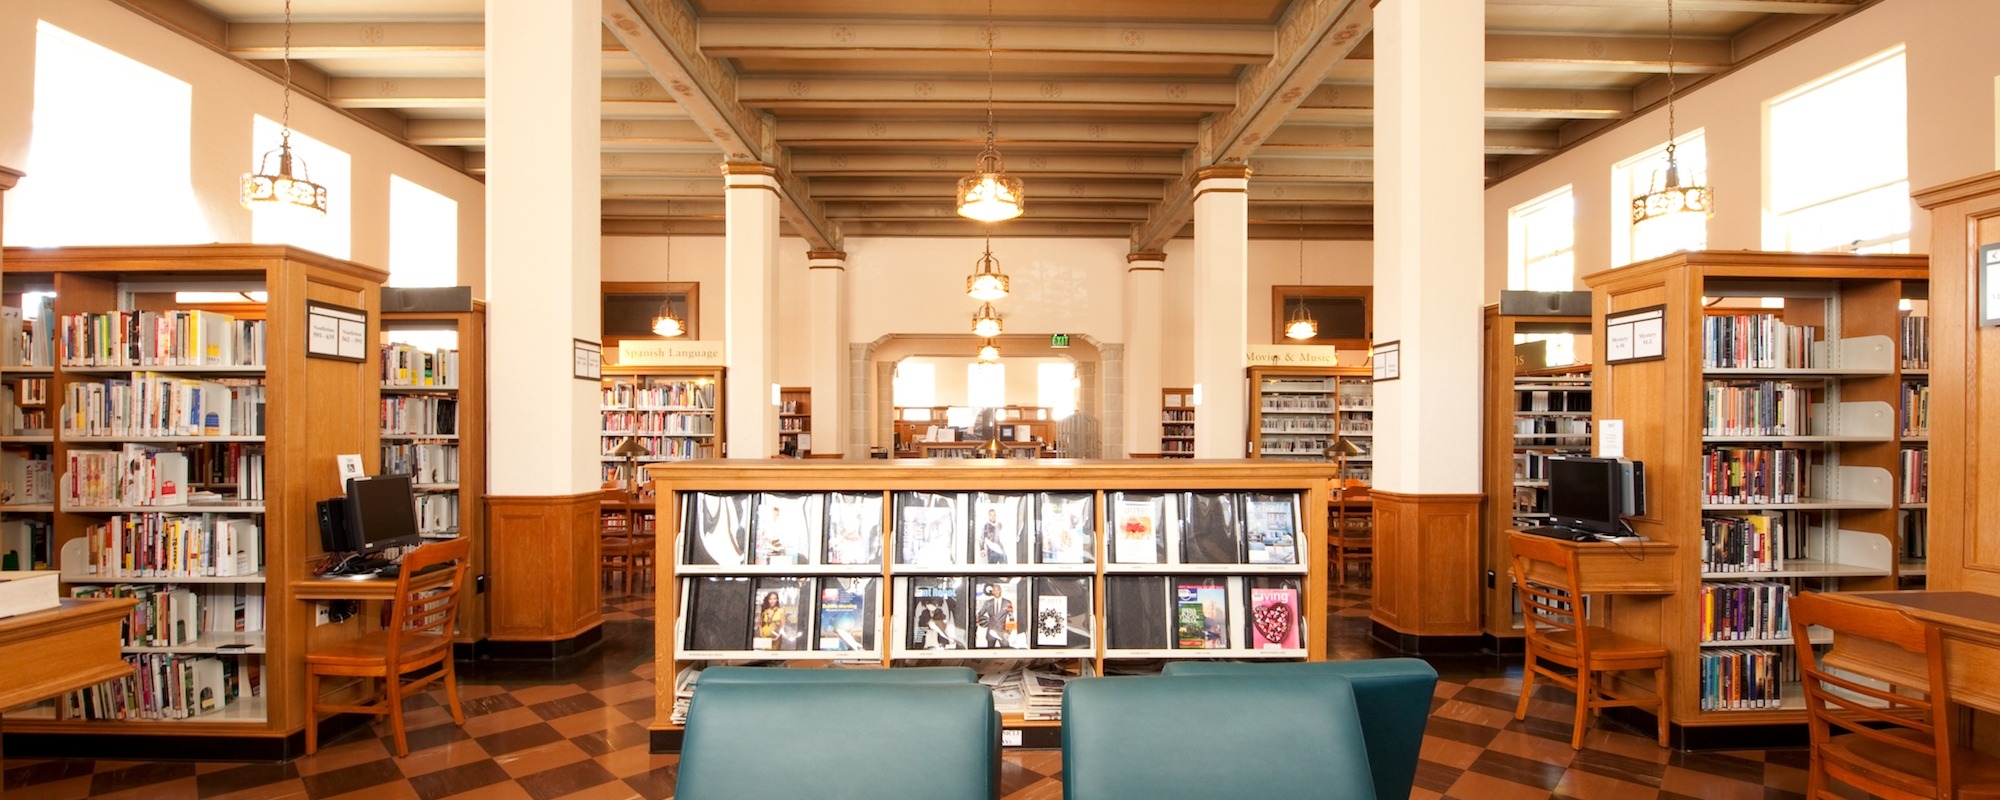 Bernal Heights Branch Library